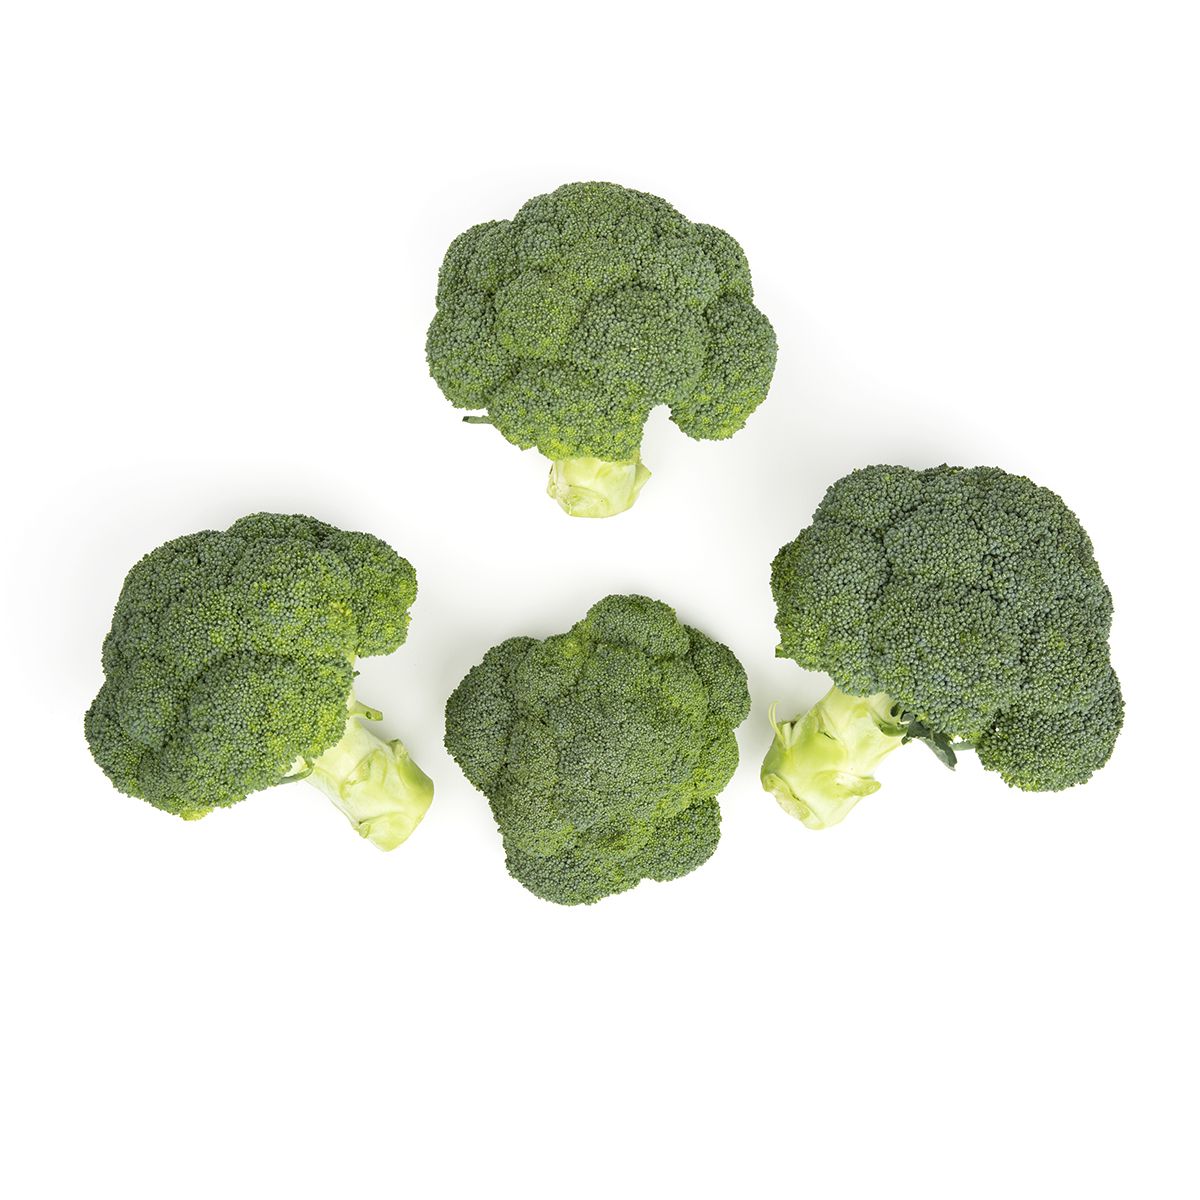 D'Arrigo Iceless Broccoli Crowns